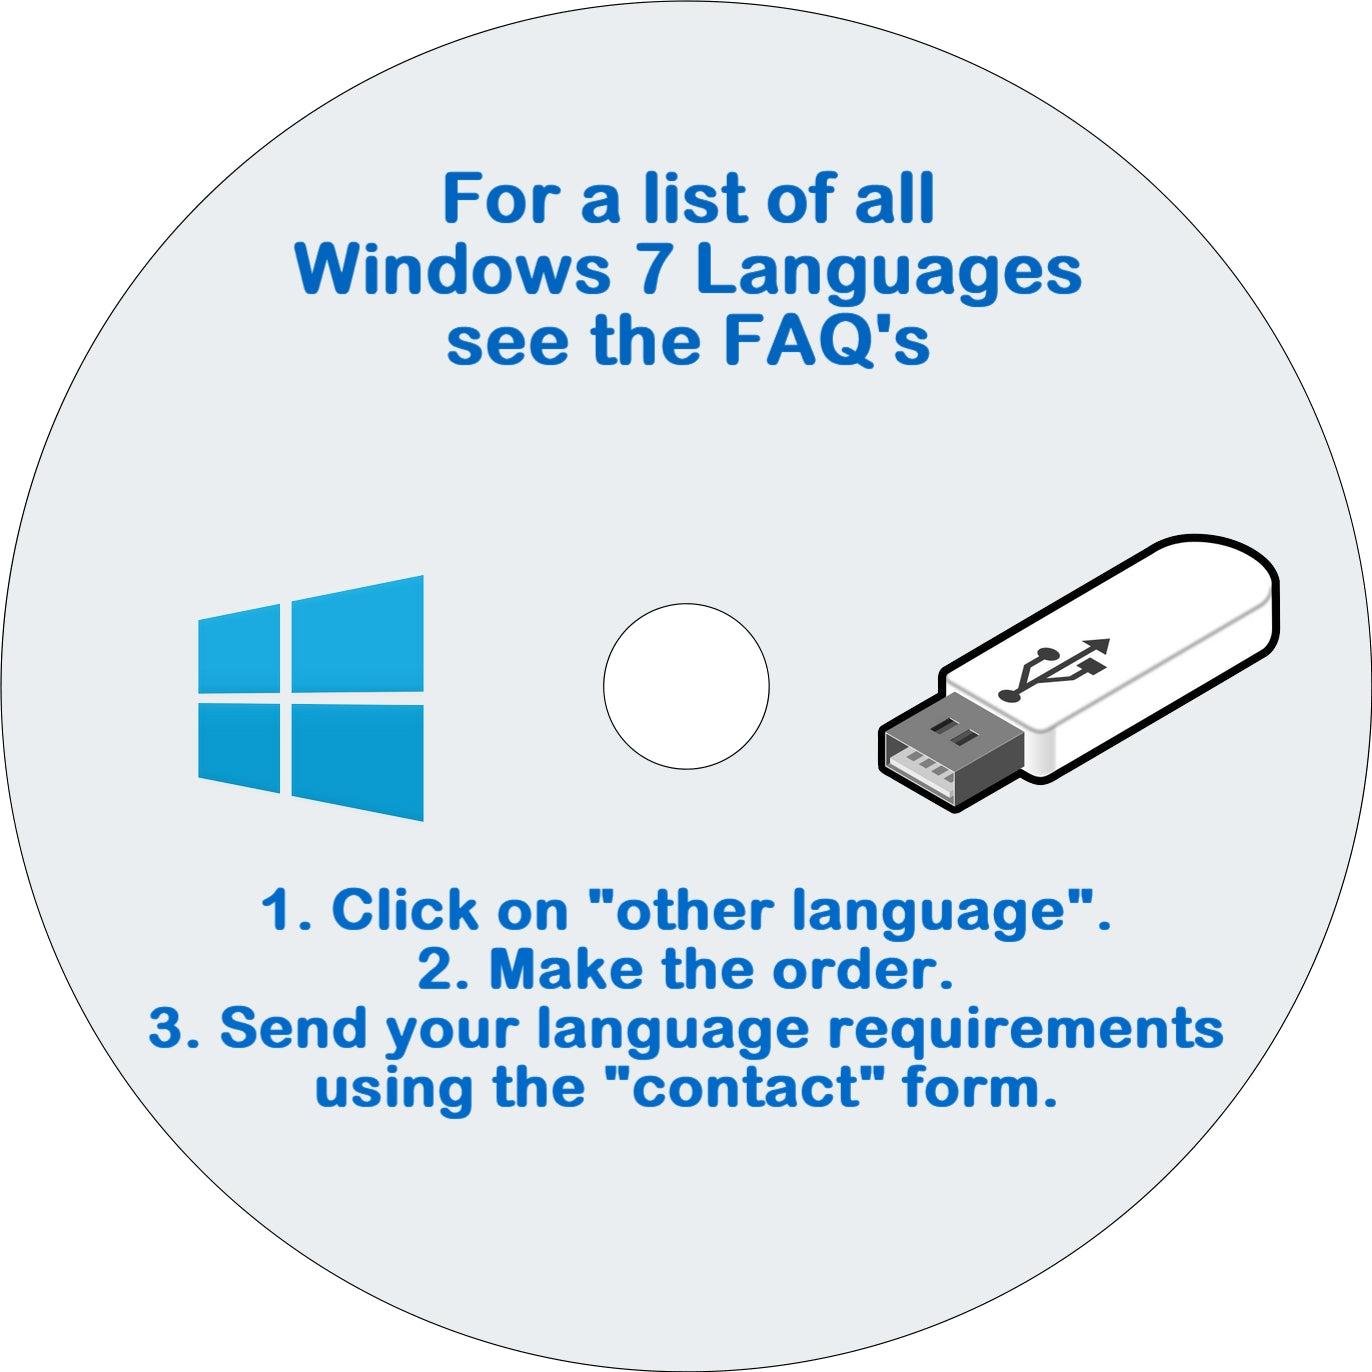 Windows 7 Enterprise Disk 32 Bit